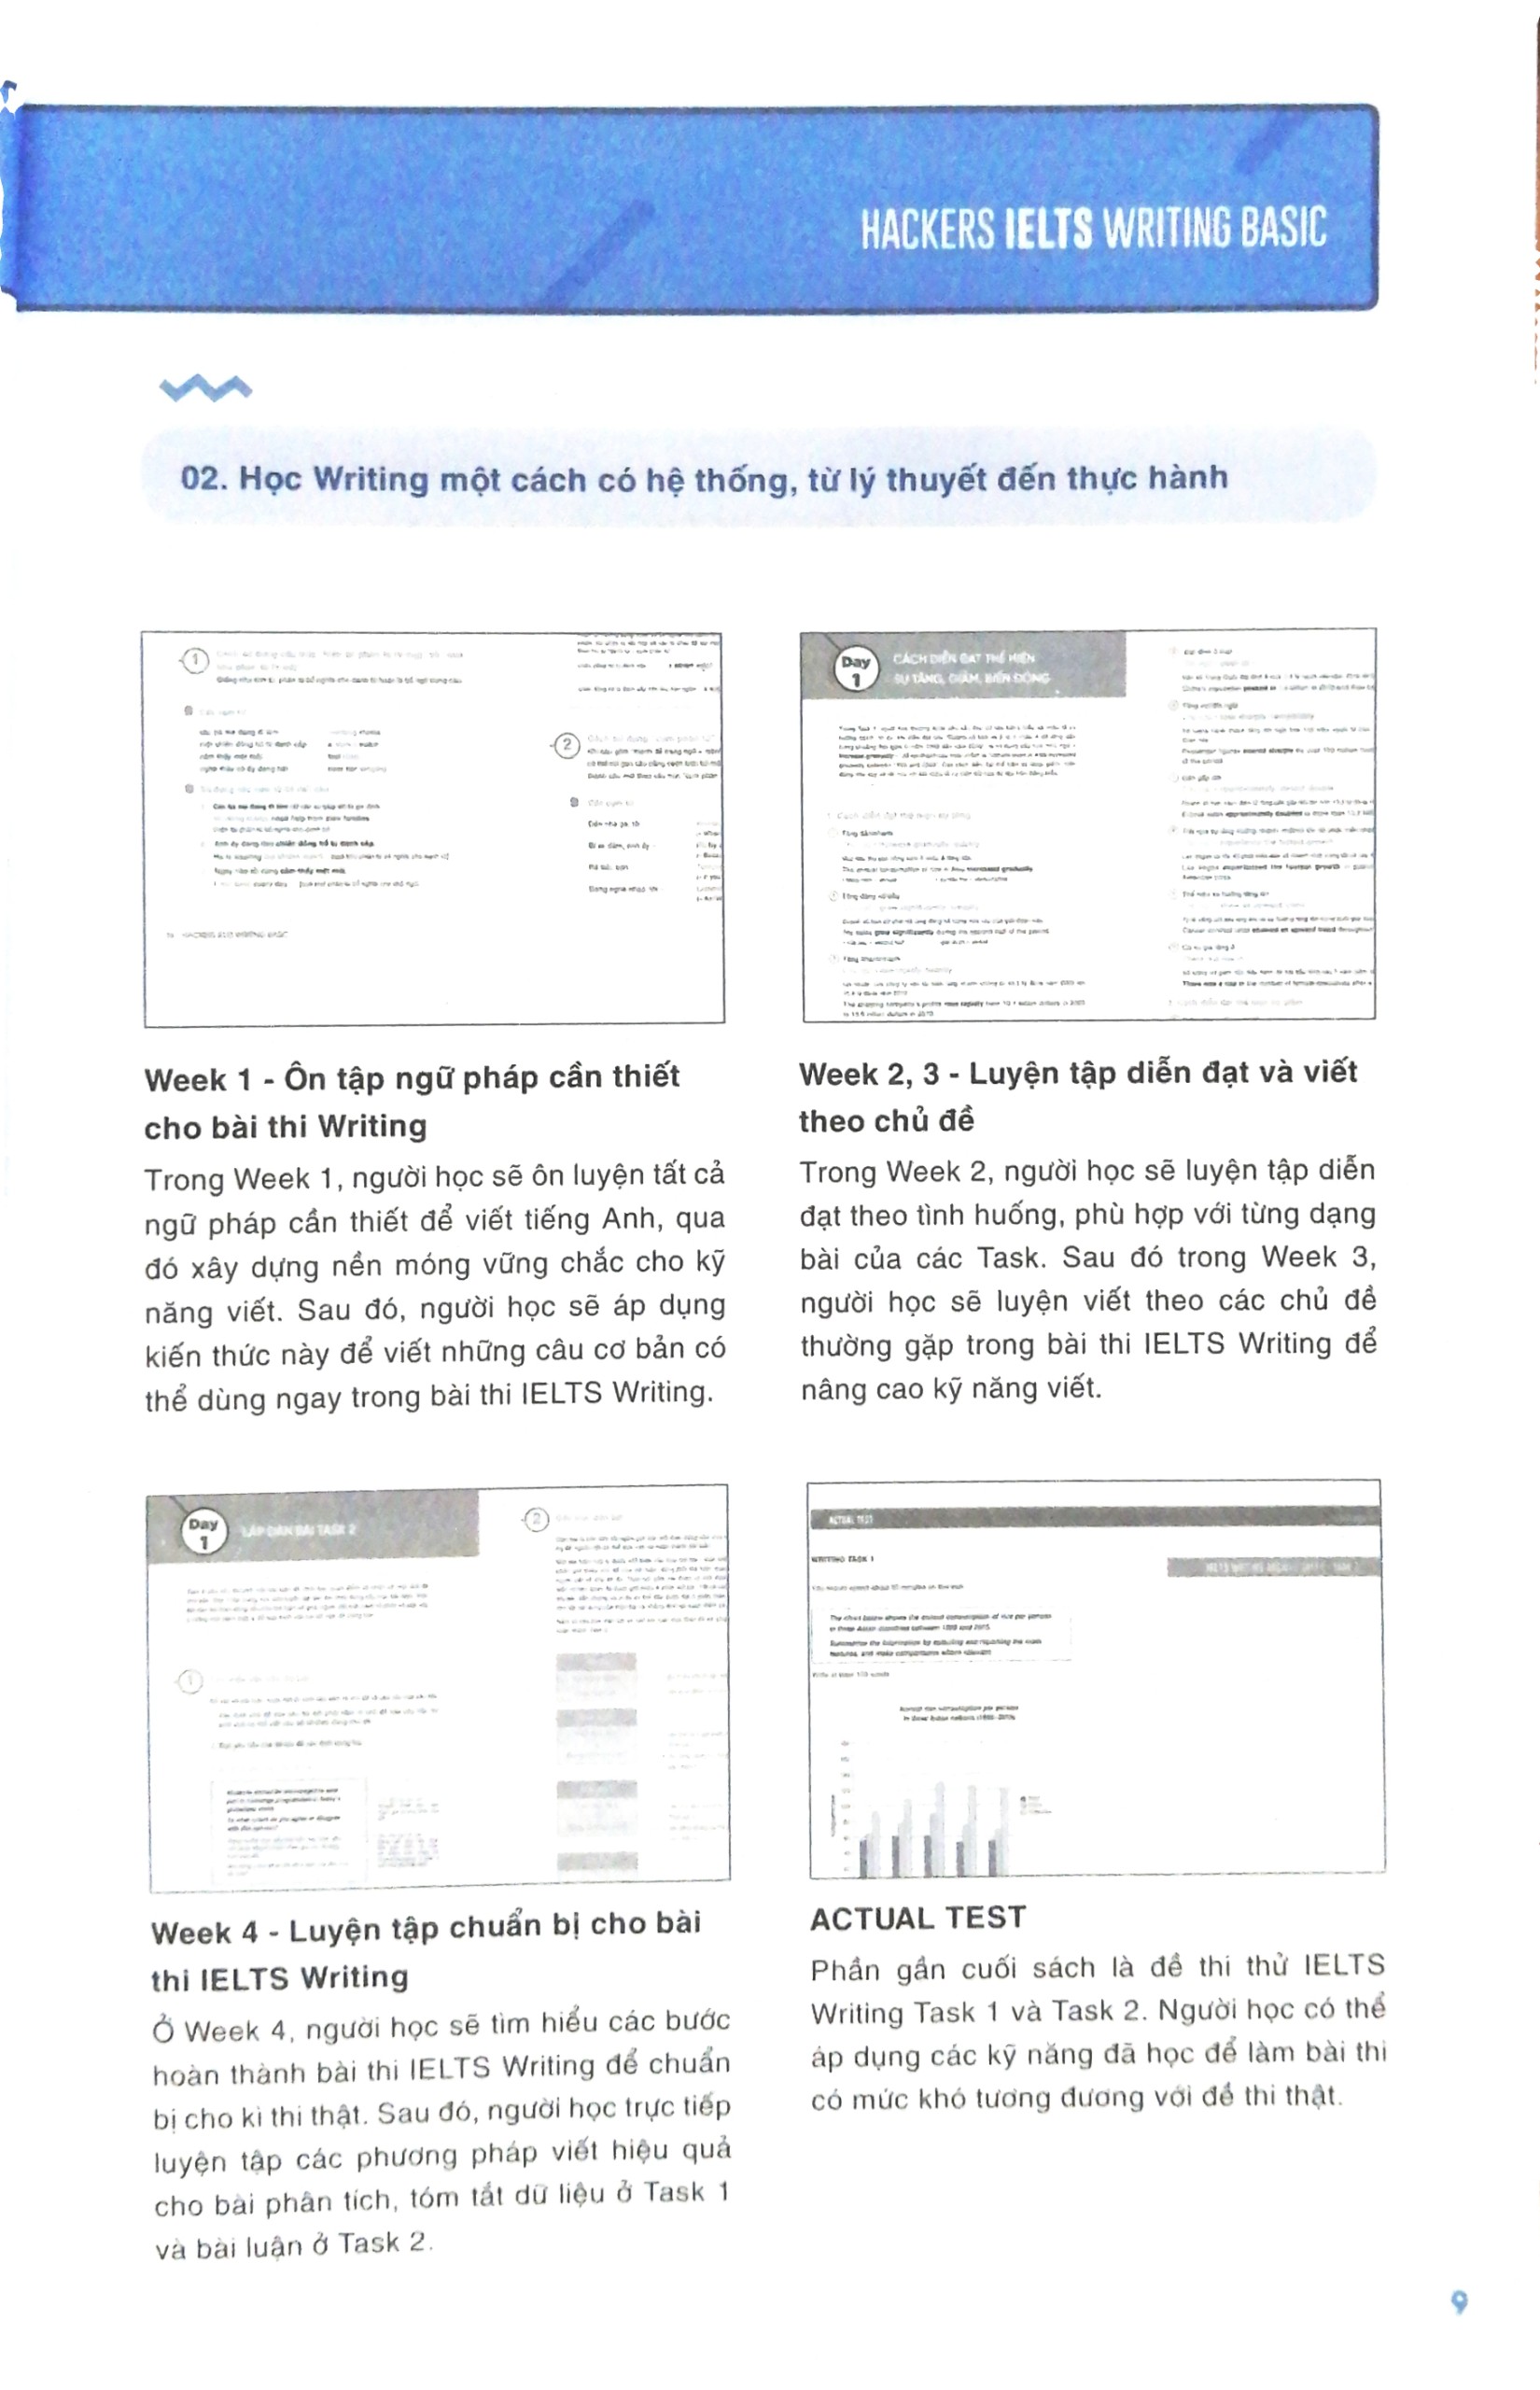 Hackers Ielts Basic - Writing PDF